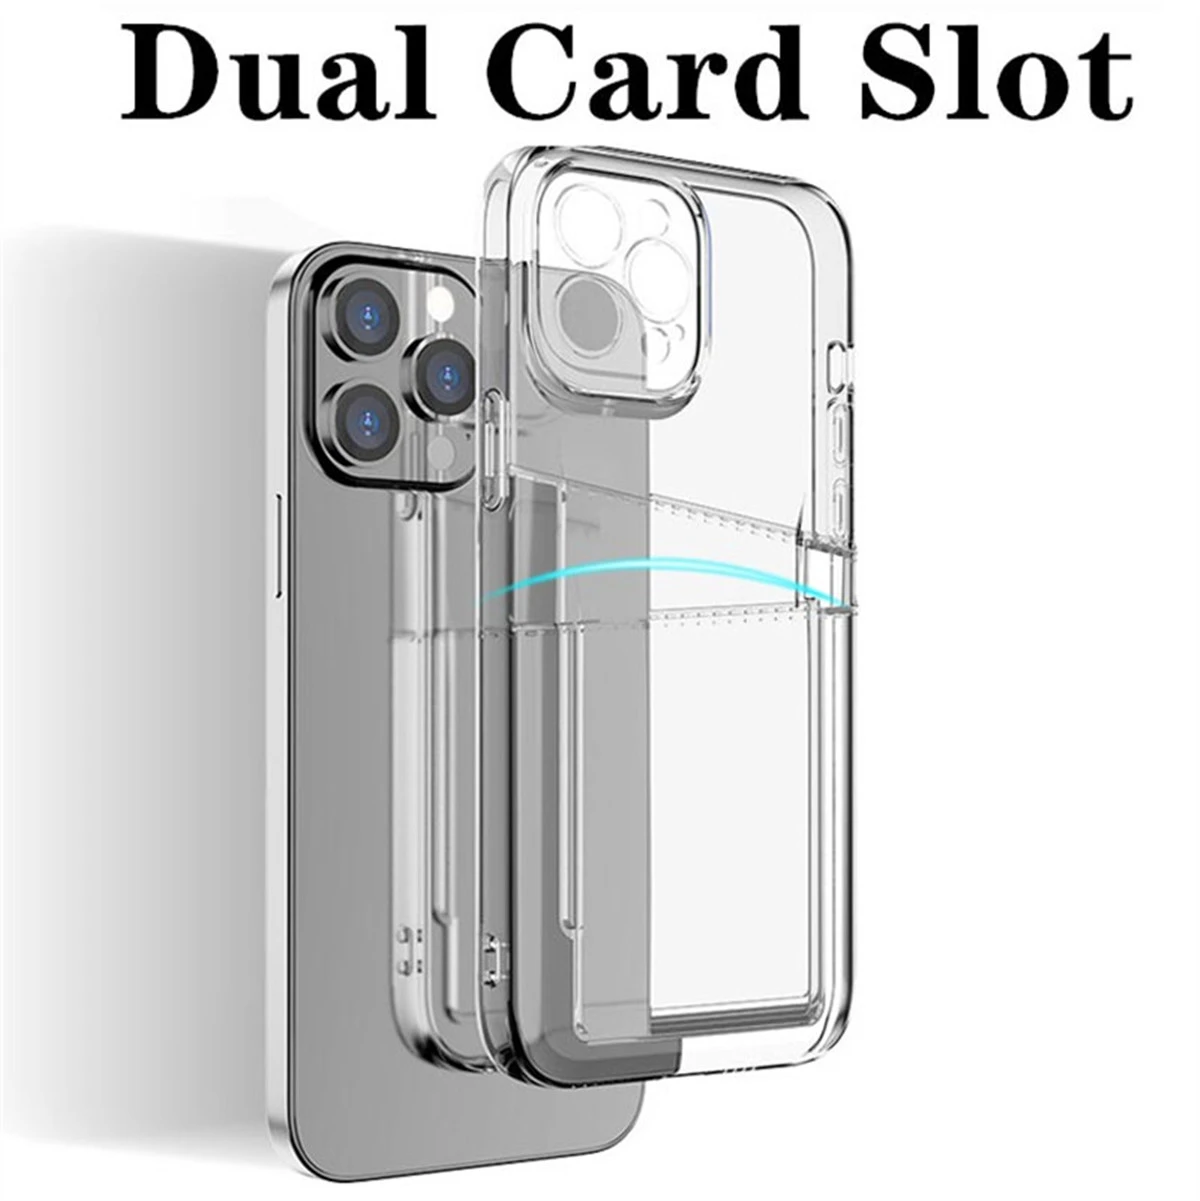 Dual Card Slot Wallet Transparent Shockproof Case For iPhone 13 12 Mini 11 Pro XS Max X XR 7 8 Plus SE 2 Clear Wallet Soft Cover iphone 11 Pro Max  lifeproof case